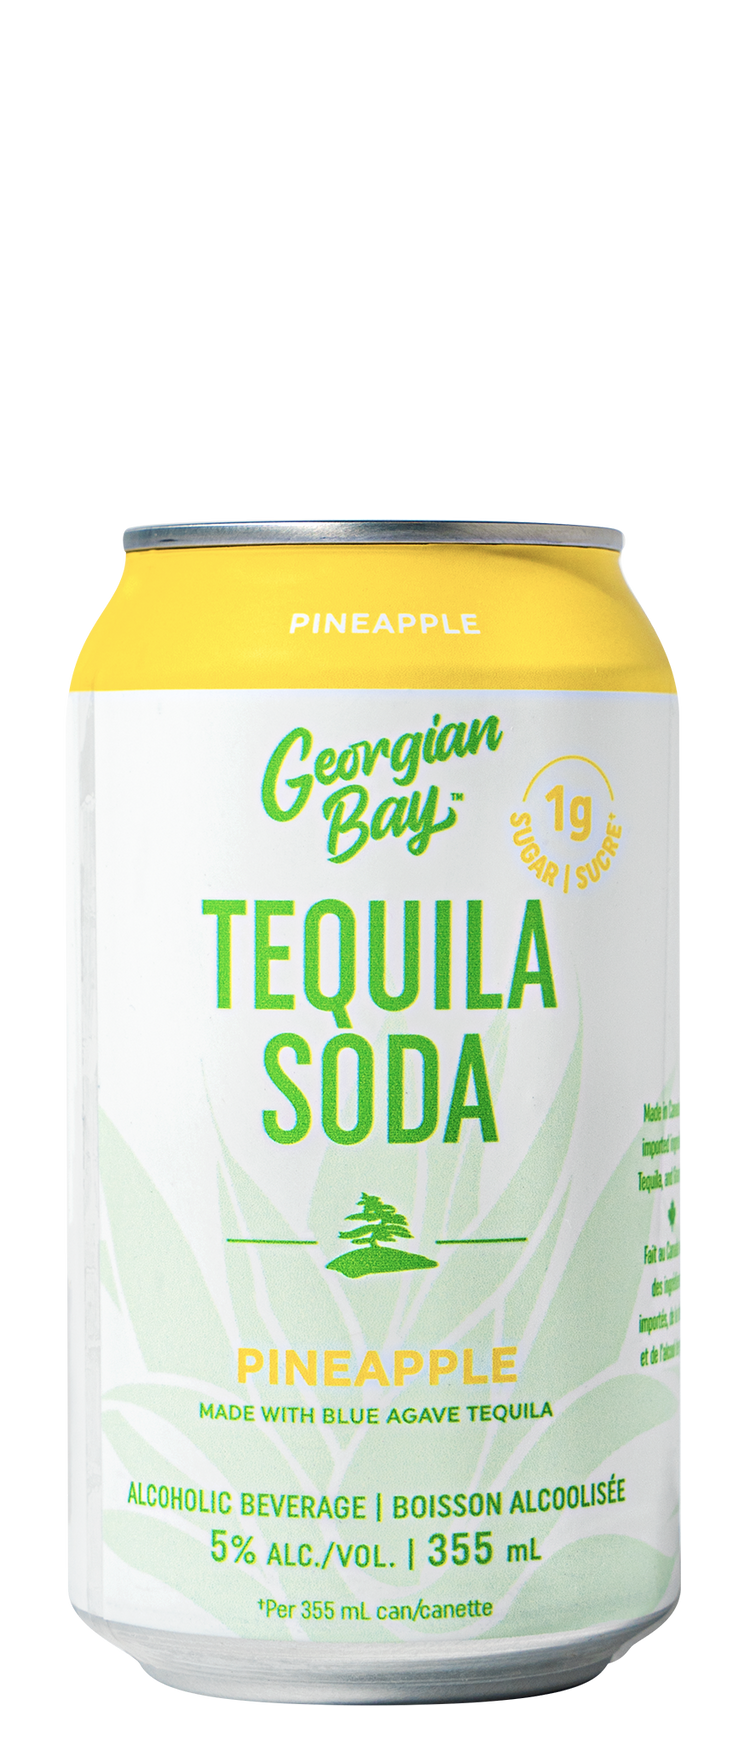 Tequila Soda Mixed Pack – Georgian Bay Spirit Co.